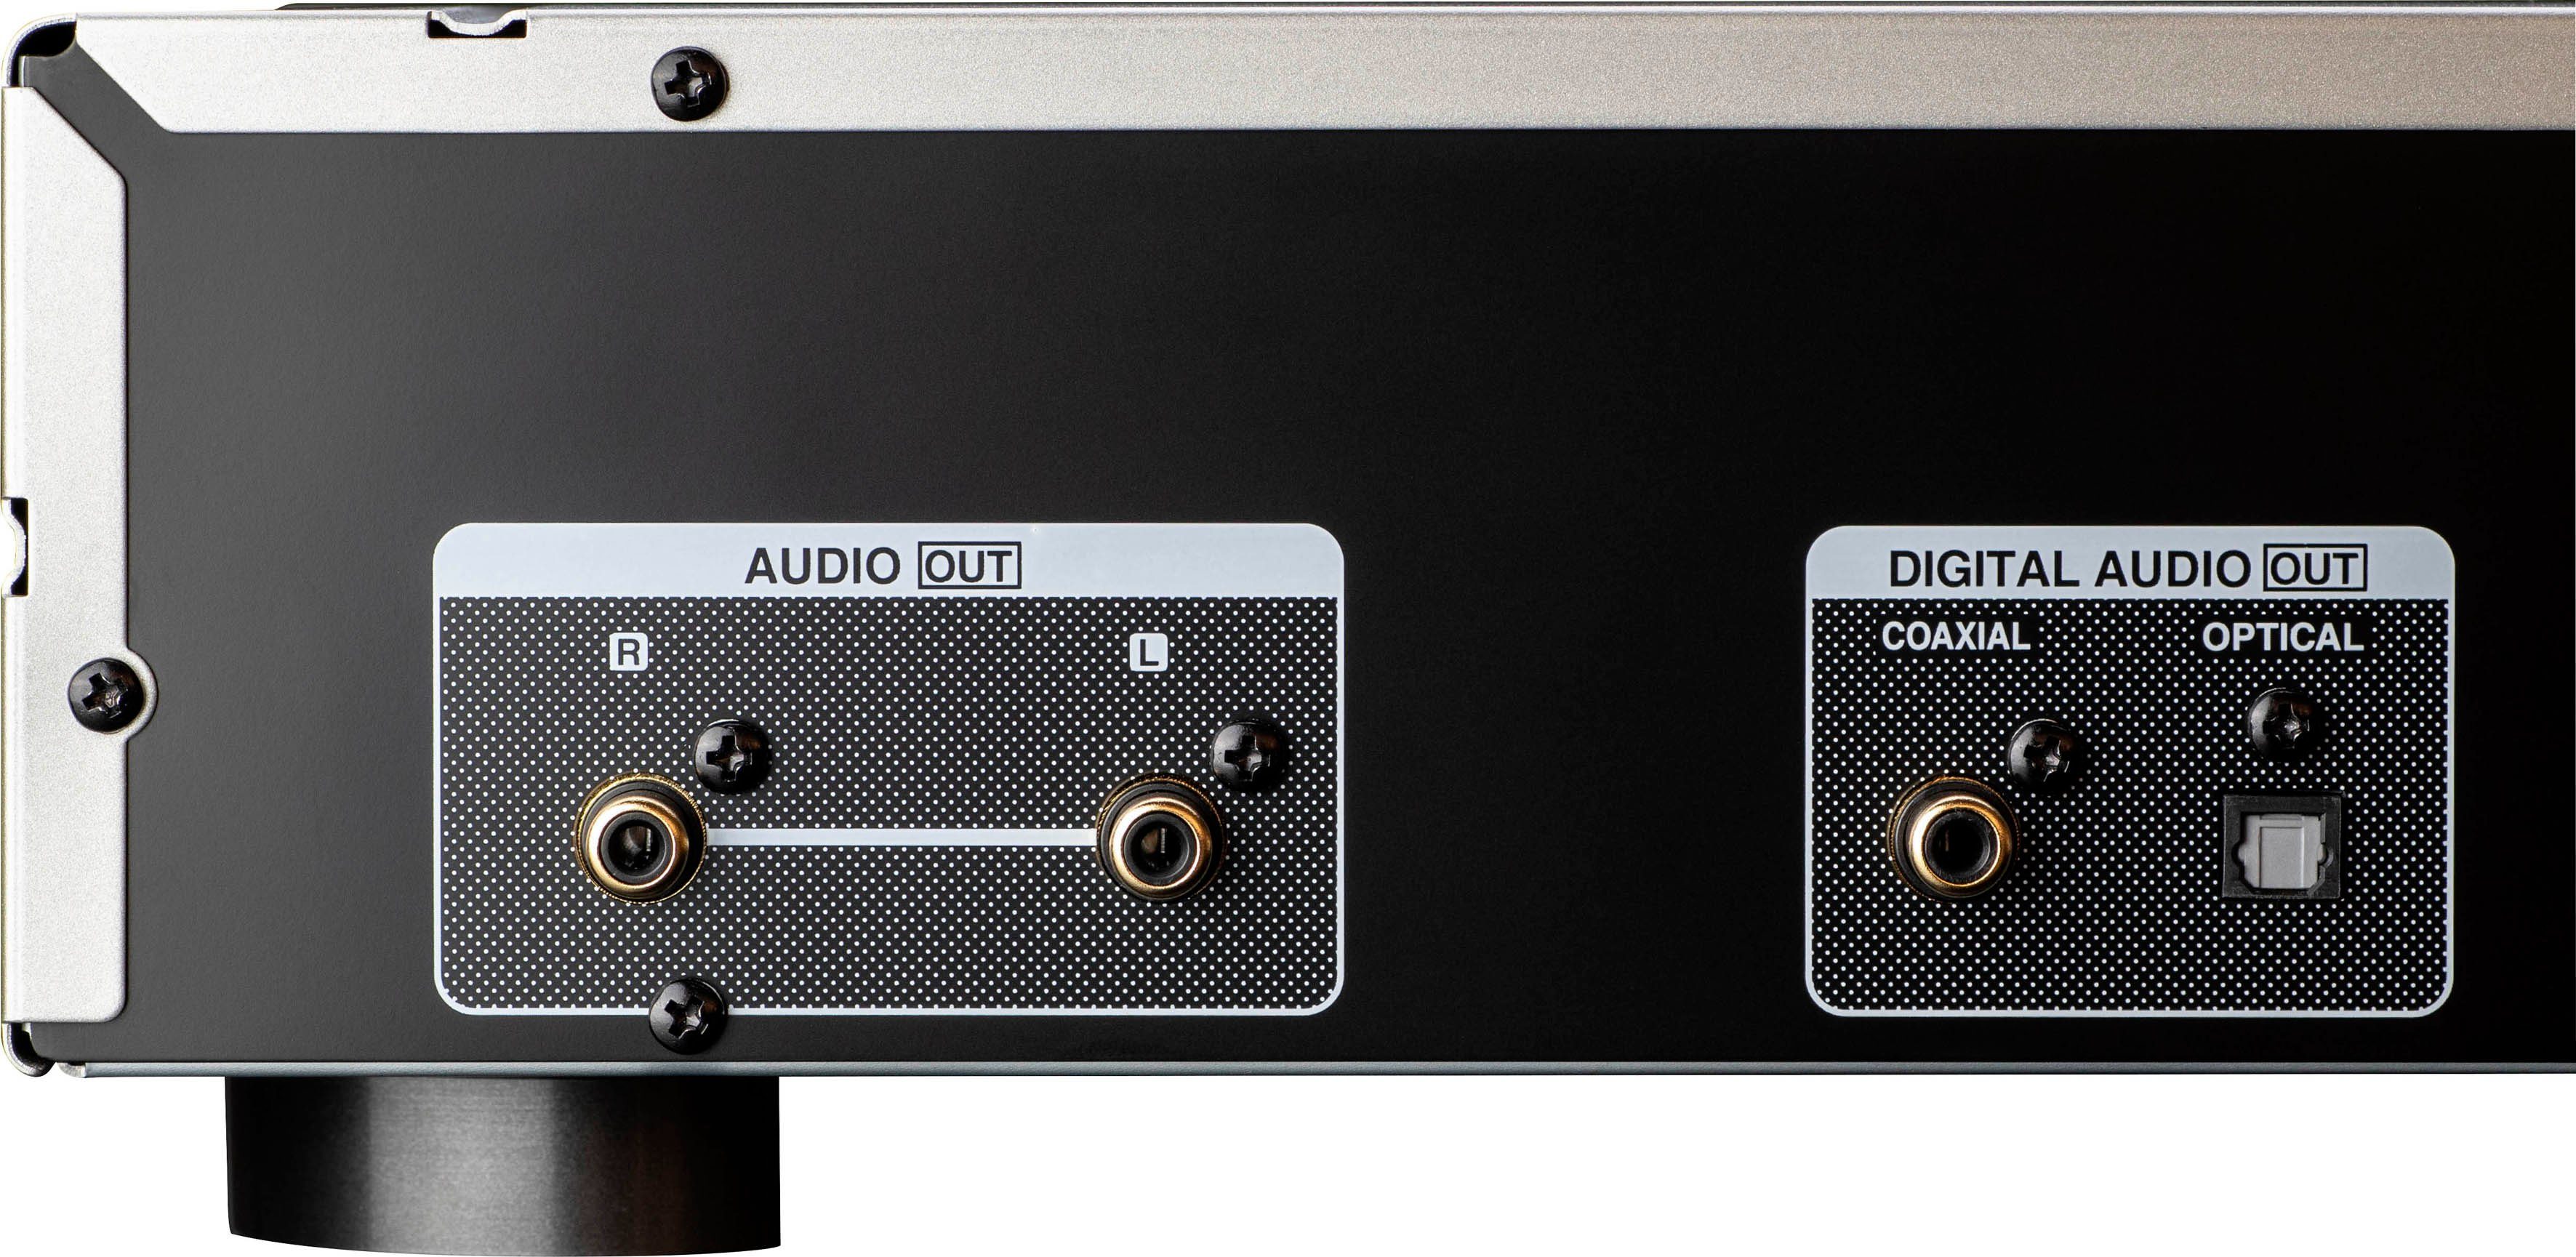 DCD-900NE Denon (USB-Audiowiedergabe) silber CD-Player